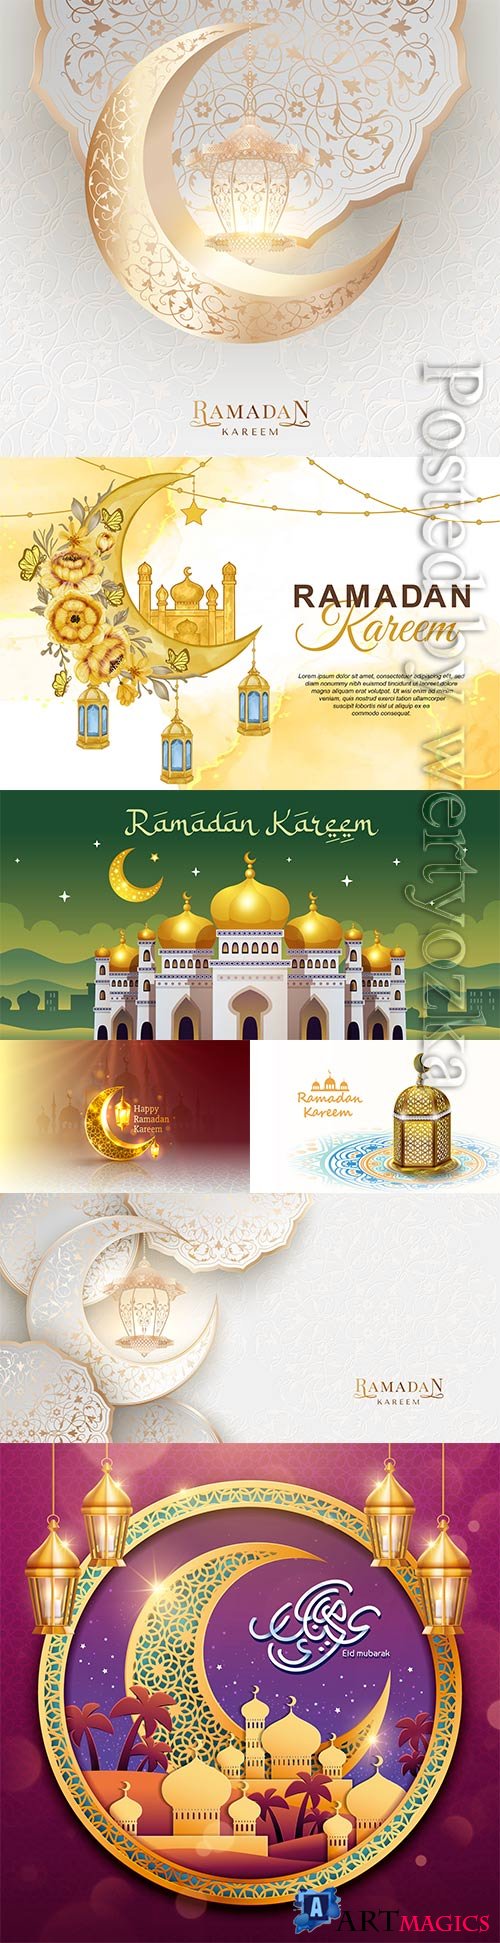 Ramadan kareem greeting card with islamic moon arabesque and lantern